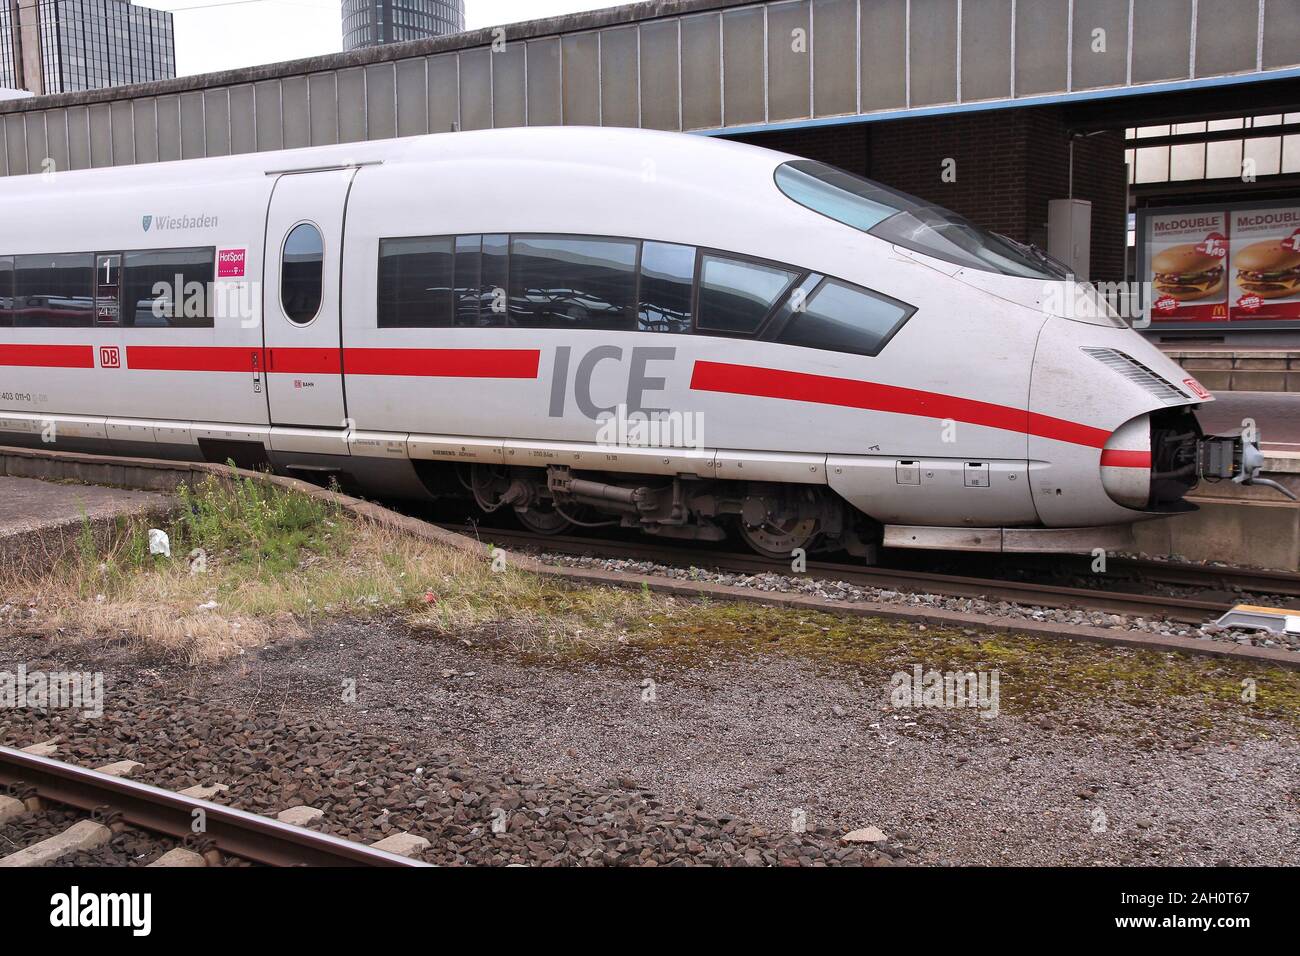 DORTMUND, GERMANY - JULY 16, 2012: ICE train of Deutsche Bahn in Dortmund, Germany. In 2009 ICE Express trains transported more than 77 million passen Stock Photo